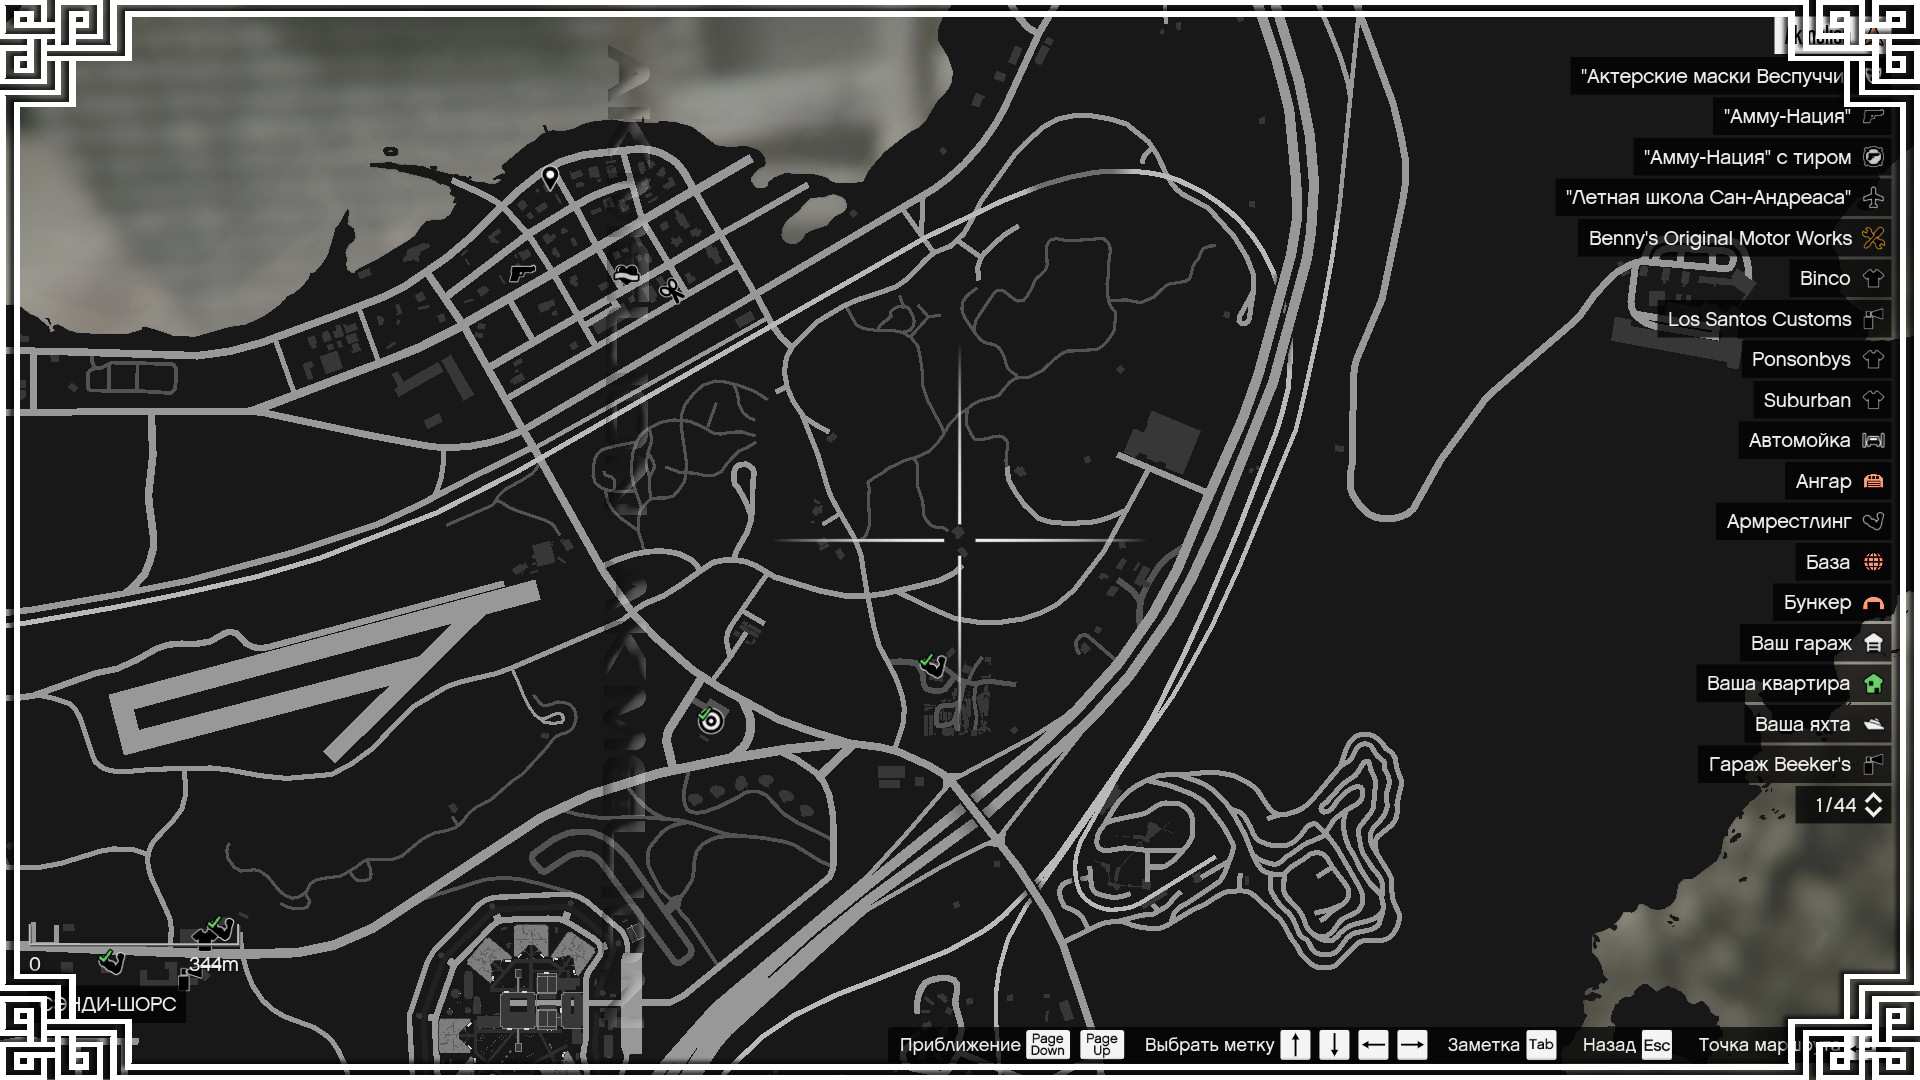 GTA 5 - All Peyote Locations (GTA Online)